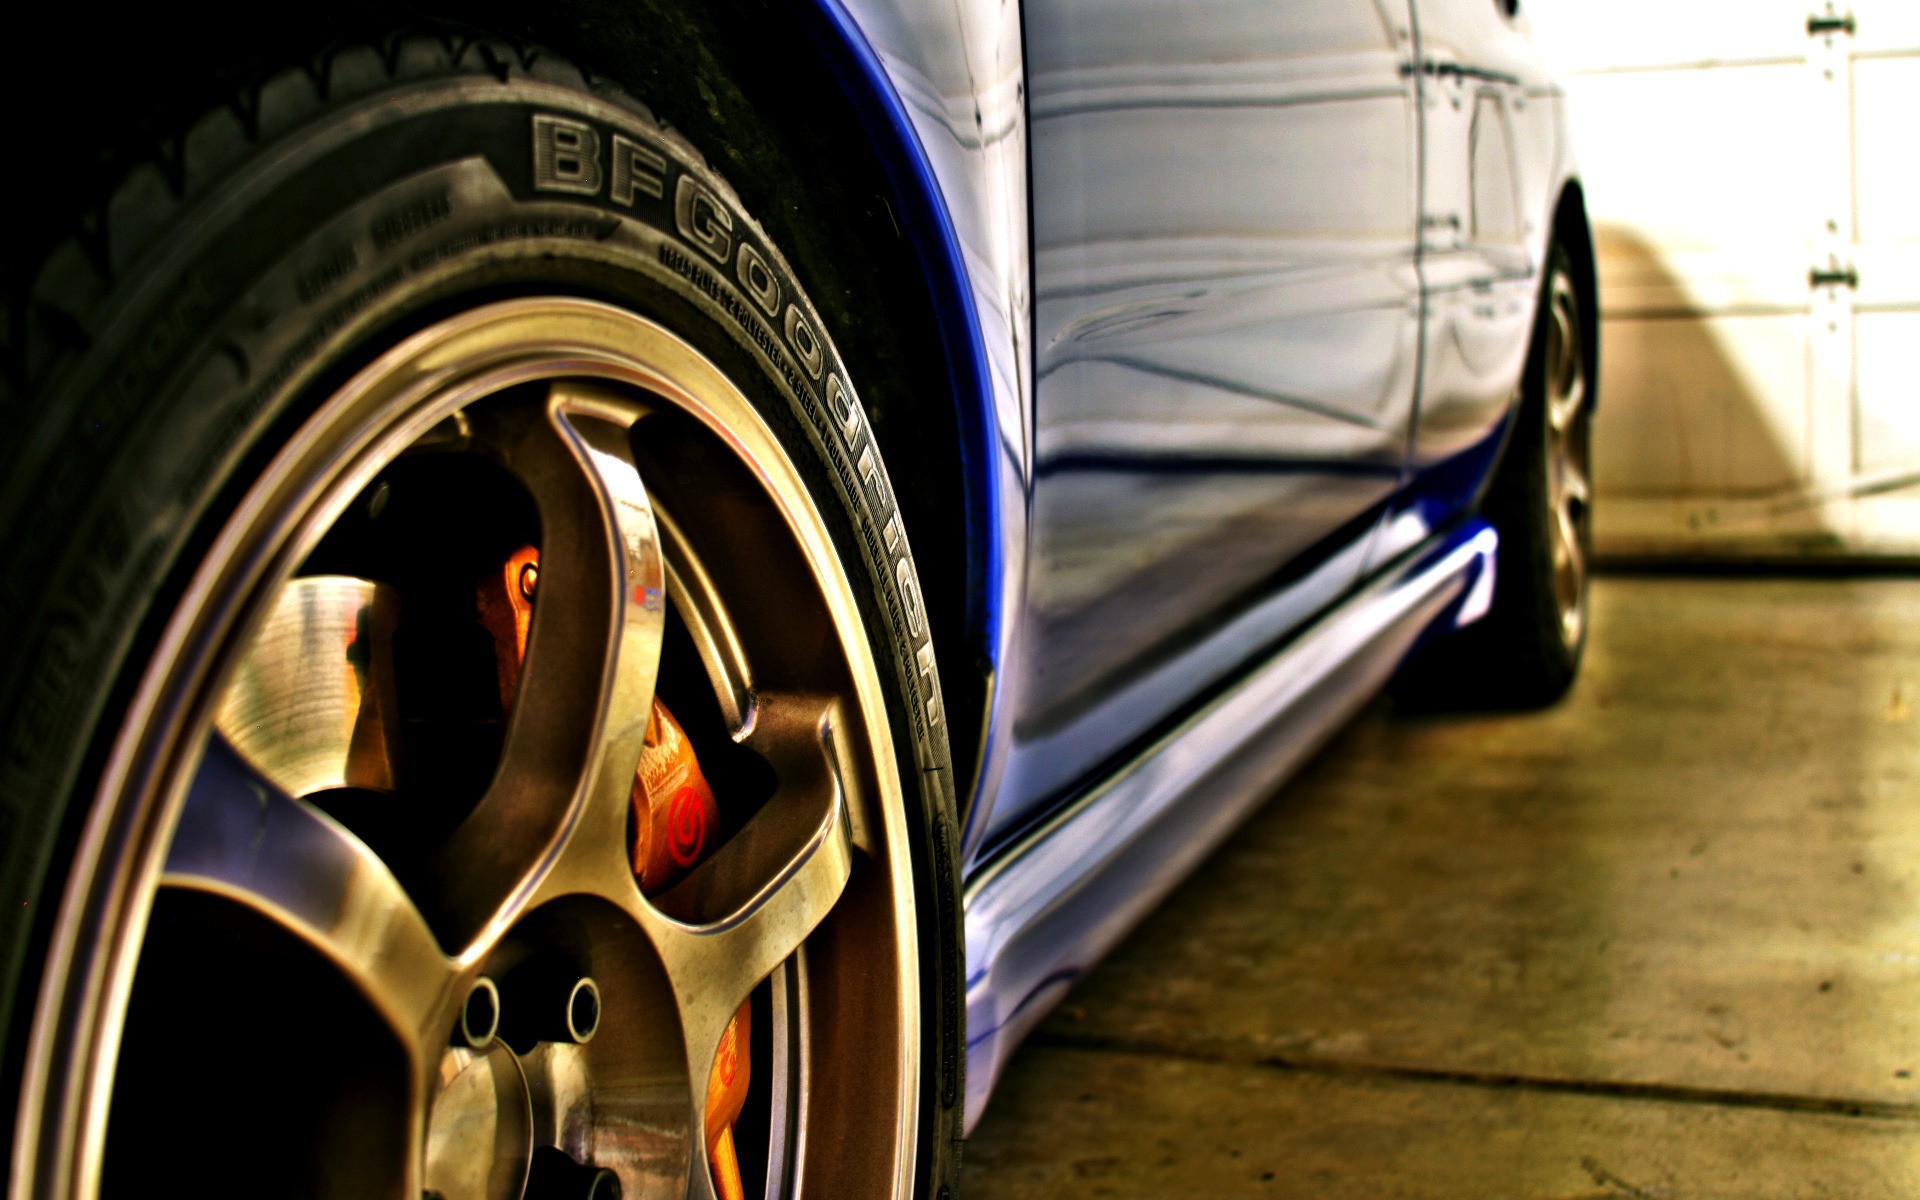 cars, HDR photography, wheels - desktop wallpaper